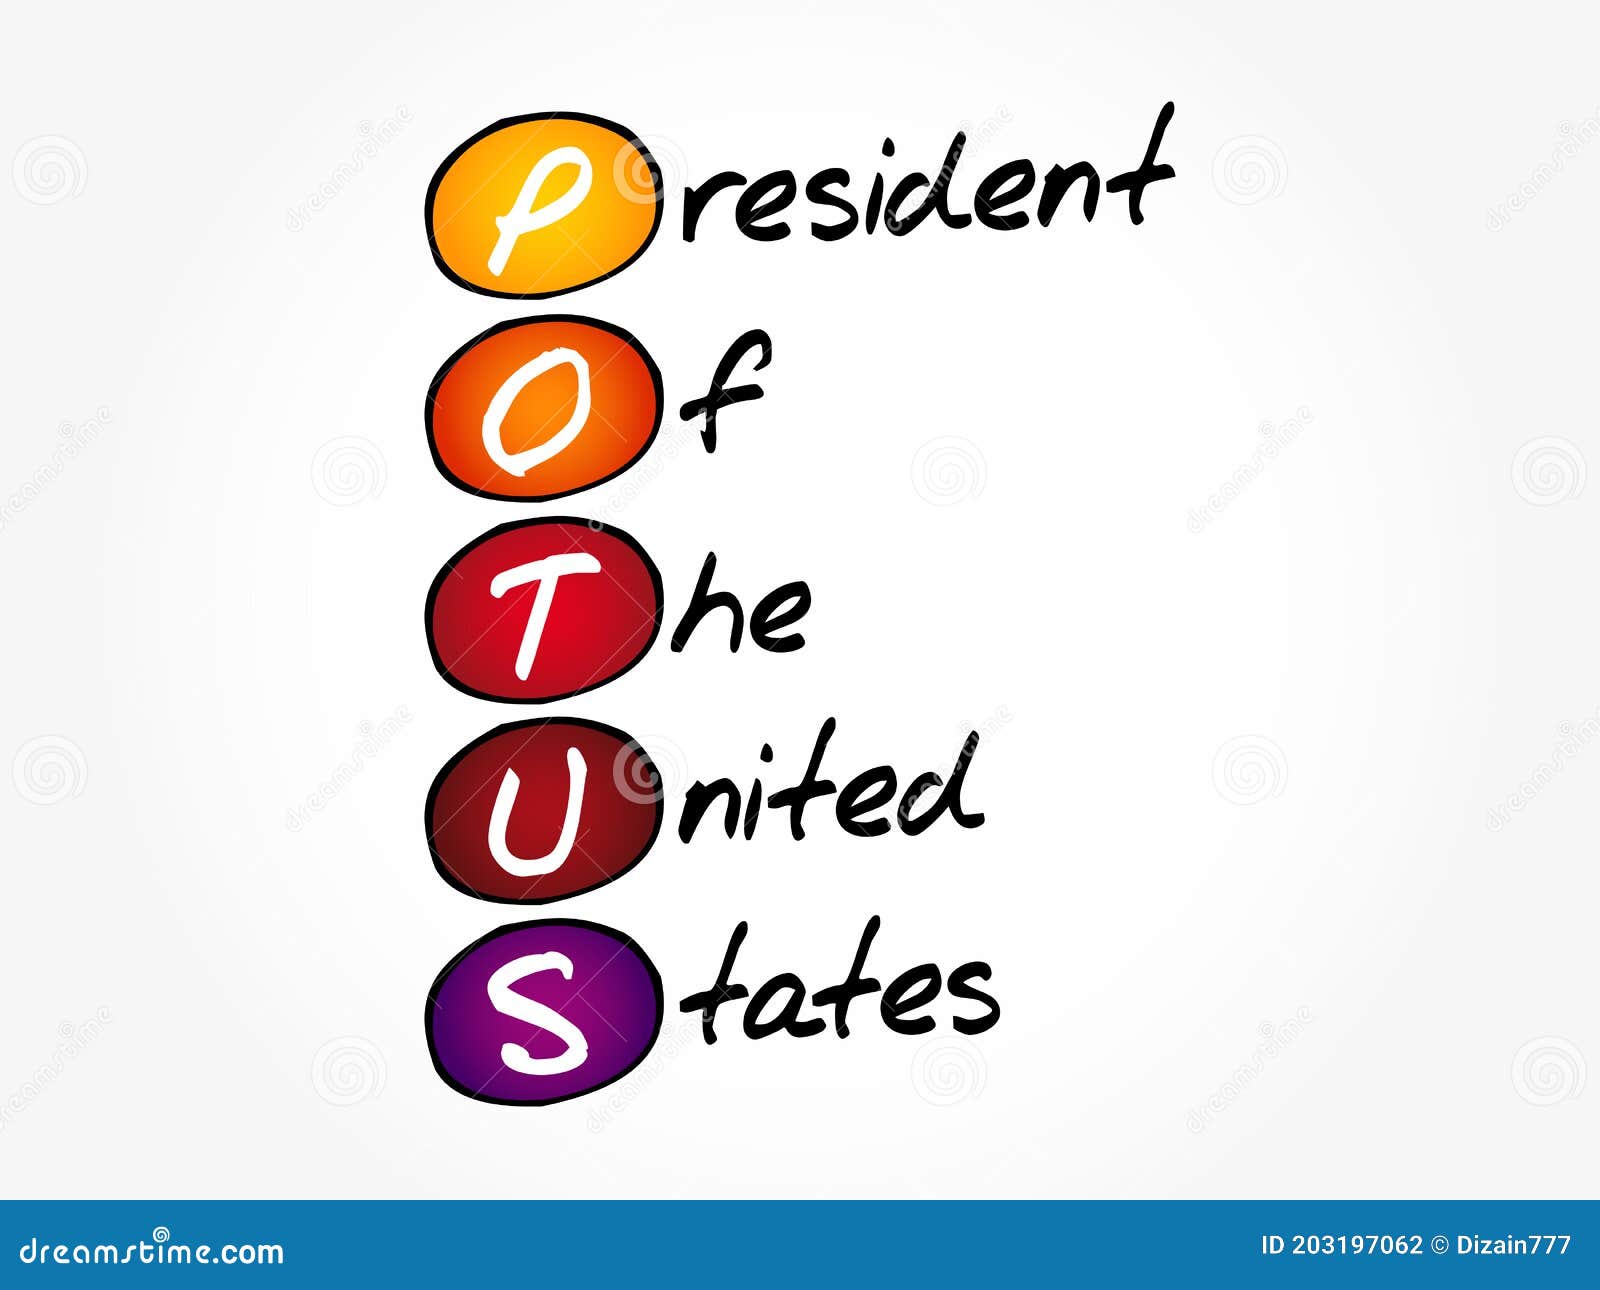 potus - president of the united states acronym